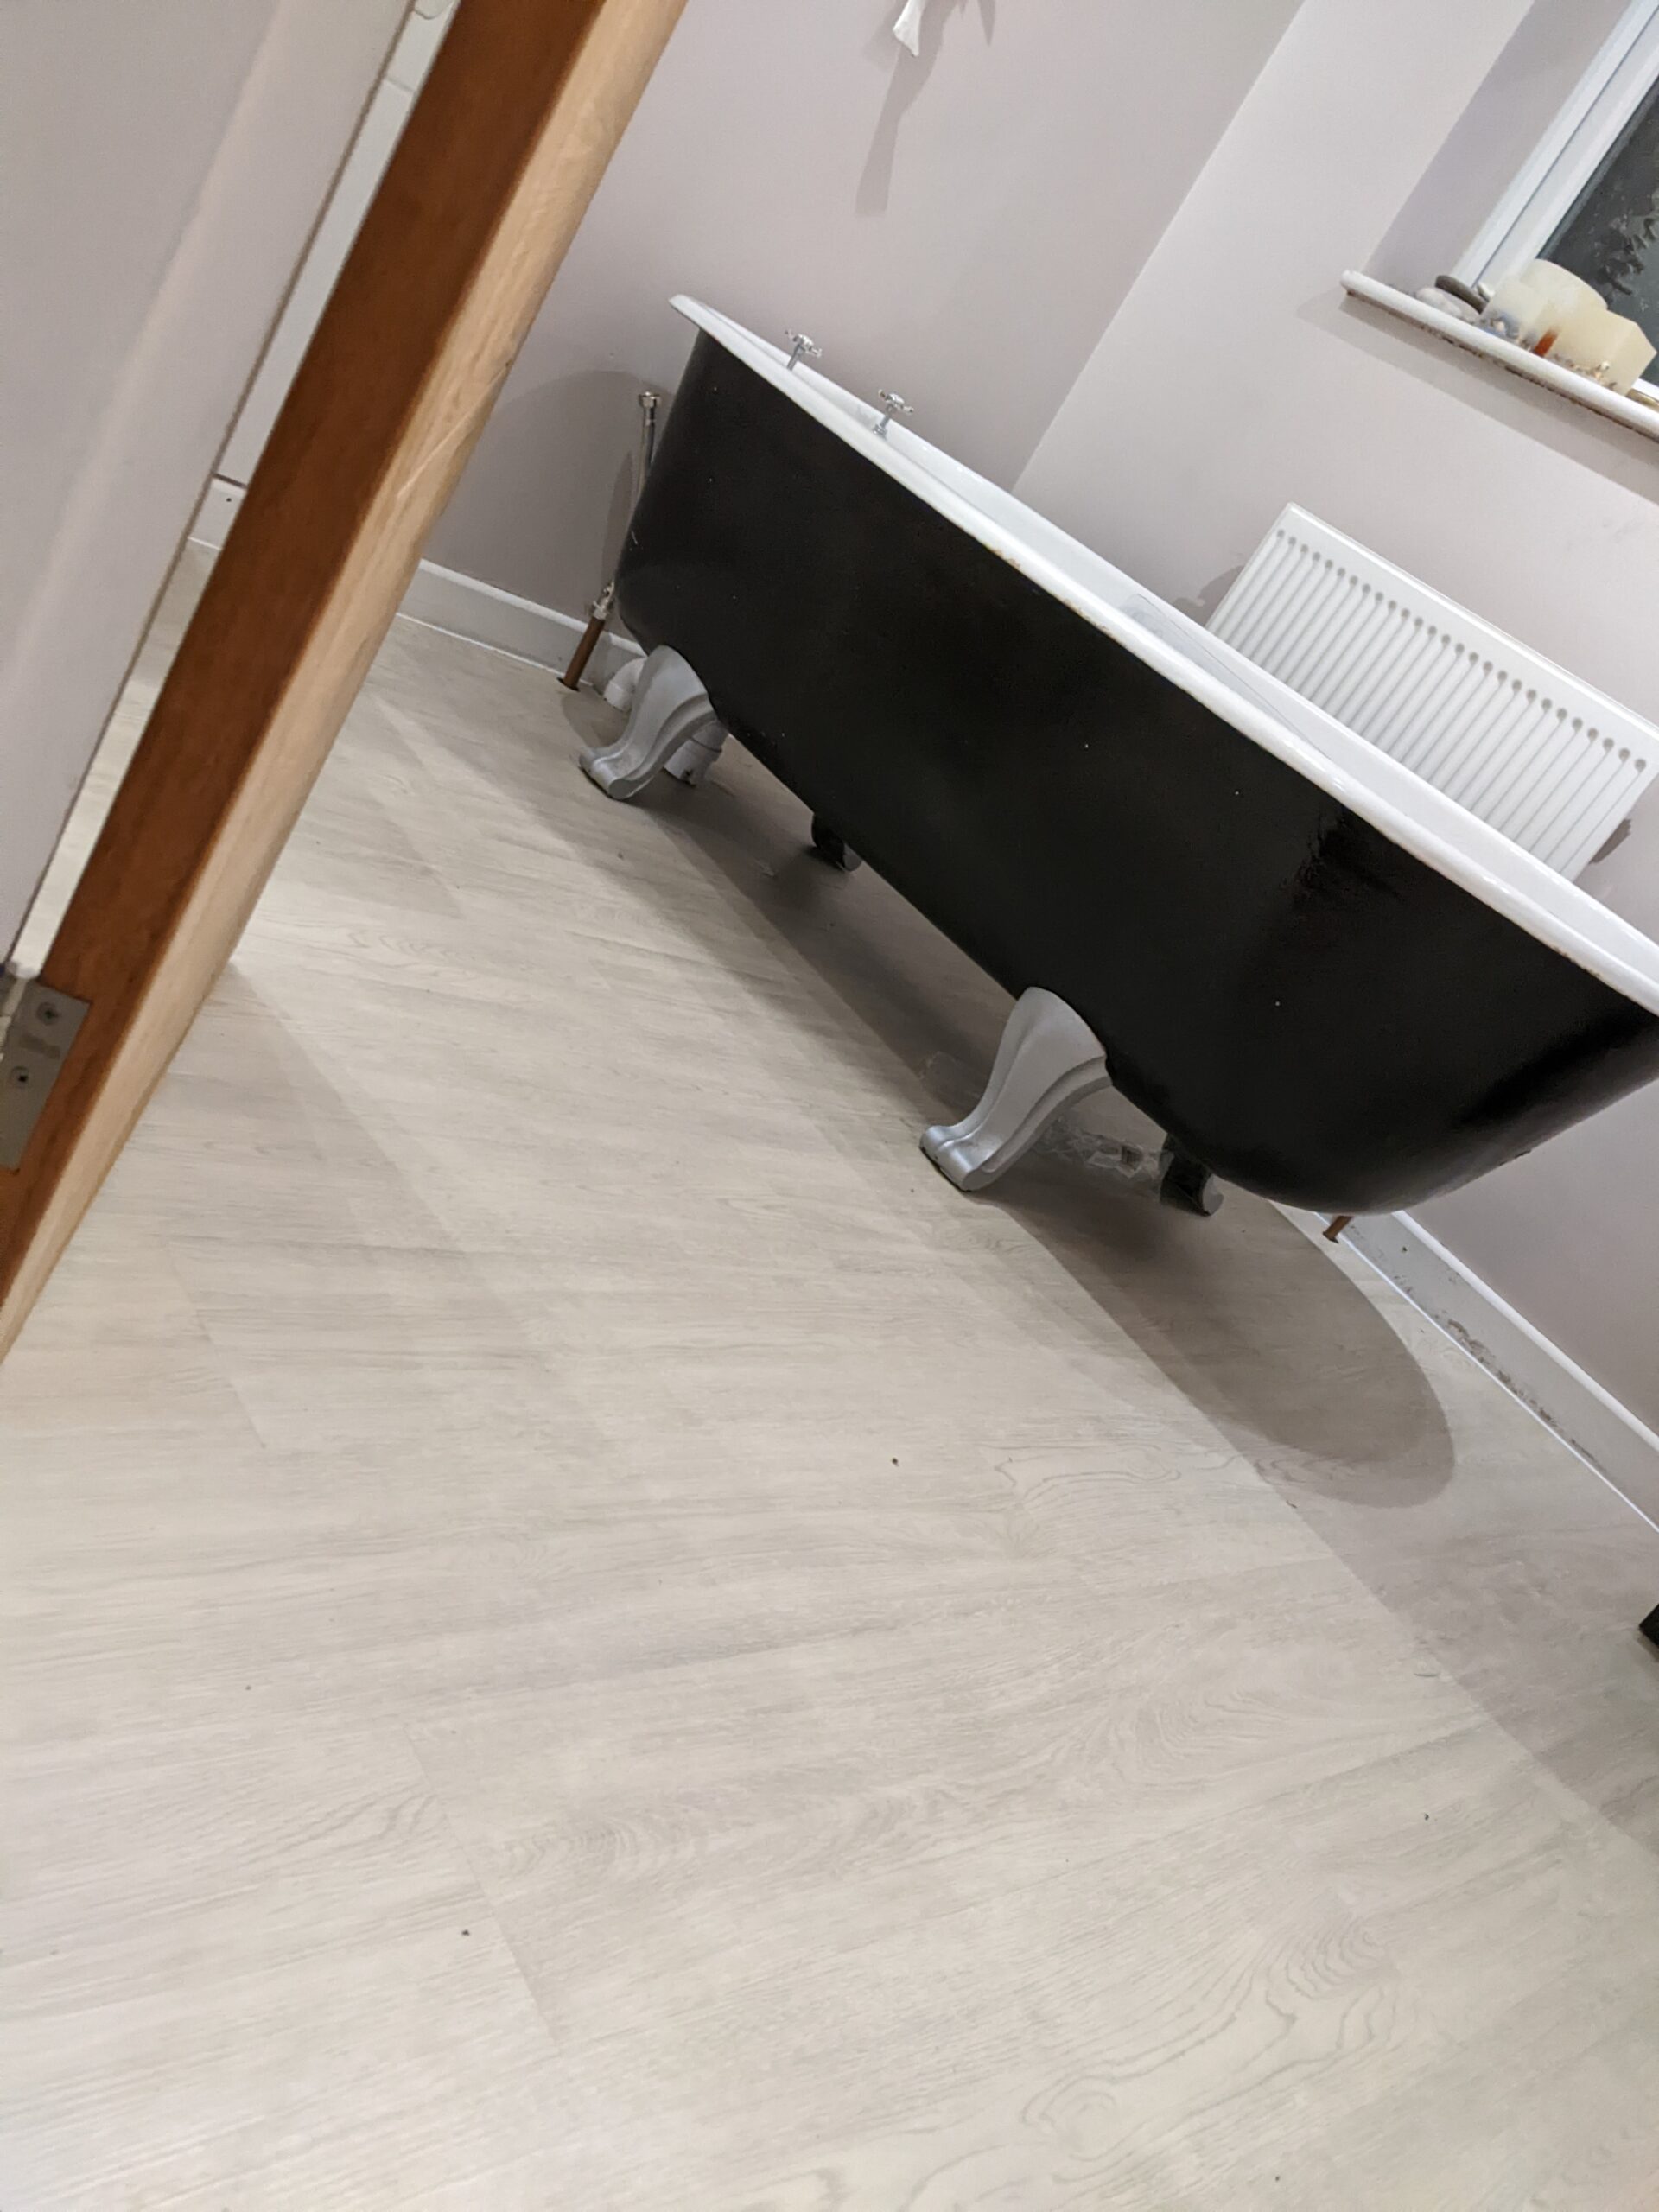 LVT Bathroom flooring fitted